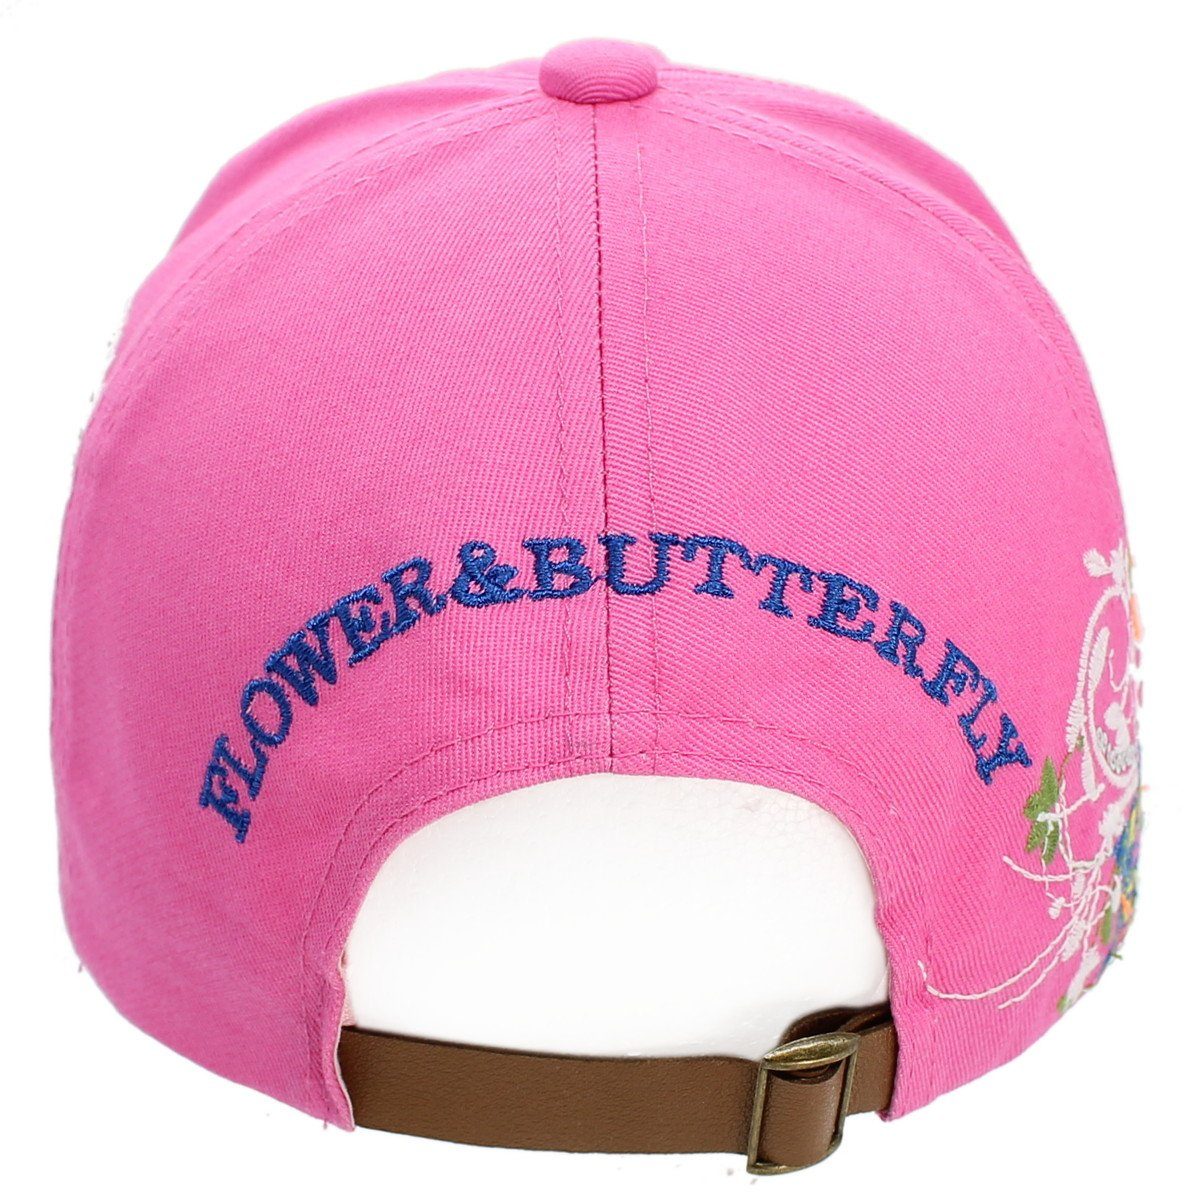 Frauen mit Belüftungslöcher Cap Sommerliche Baseballkappe Damen Bunt Baseball dy_mode Schirmmütze K230-Pink Kappe